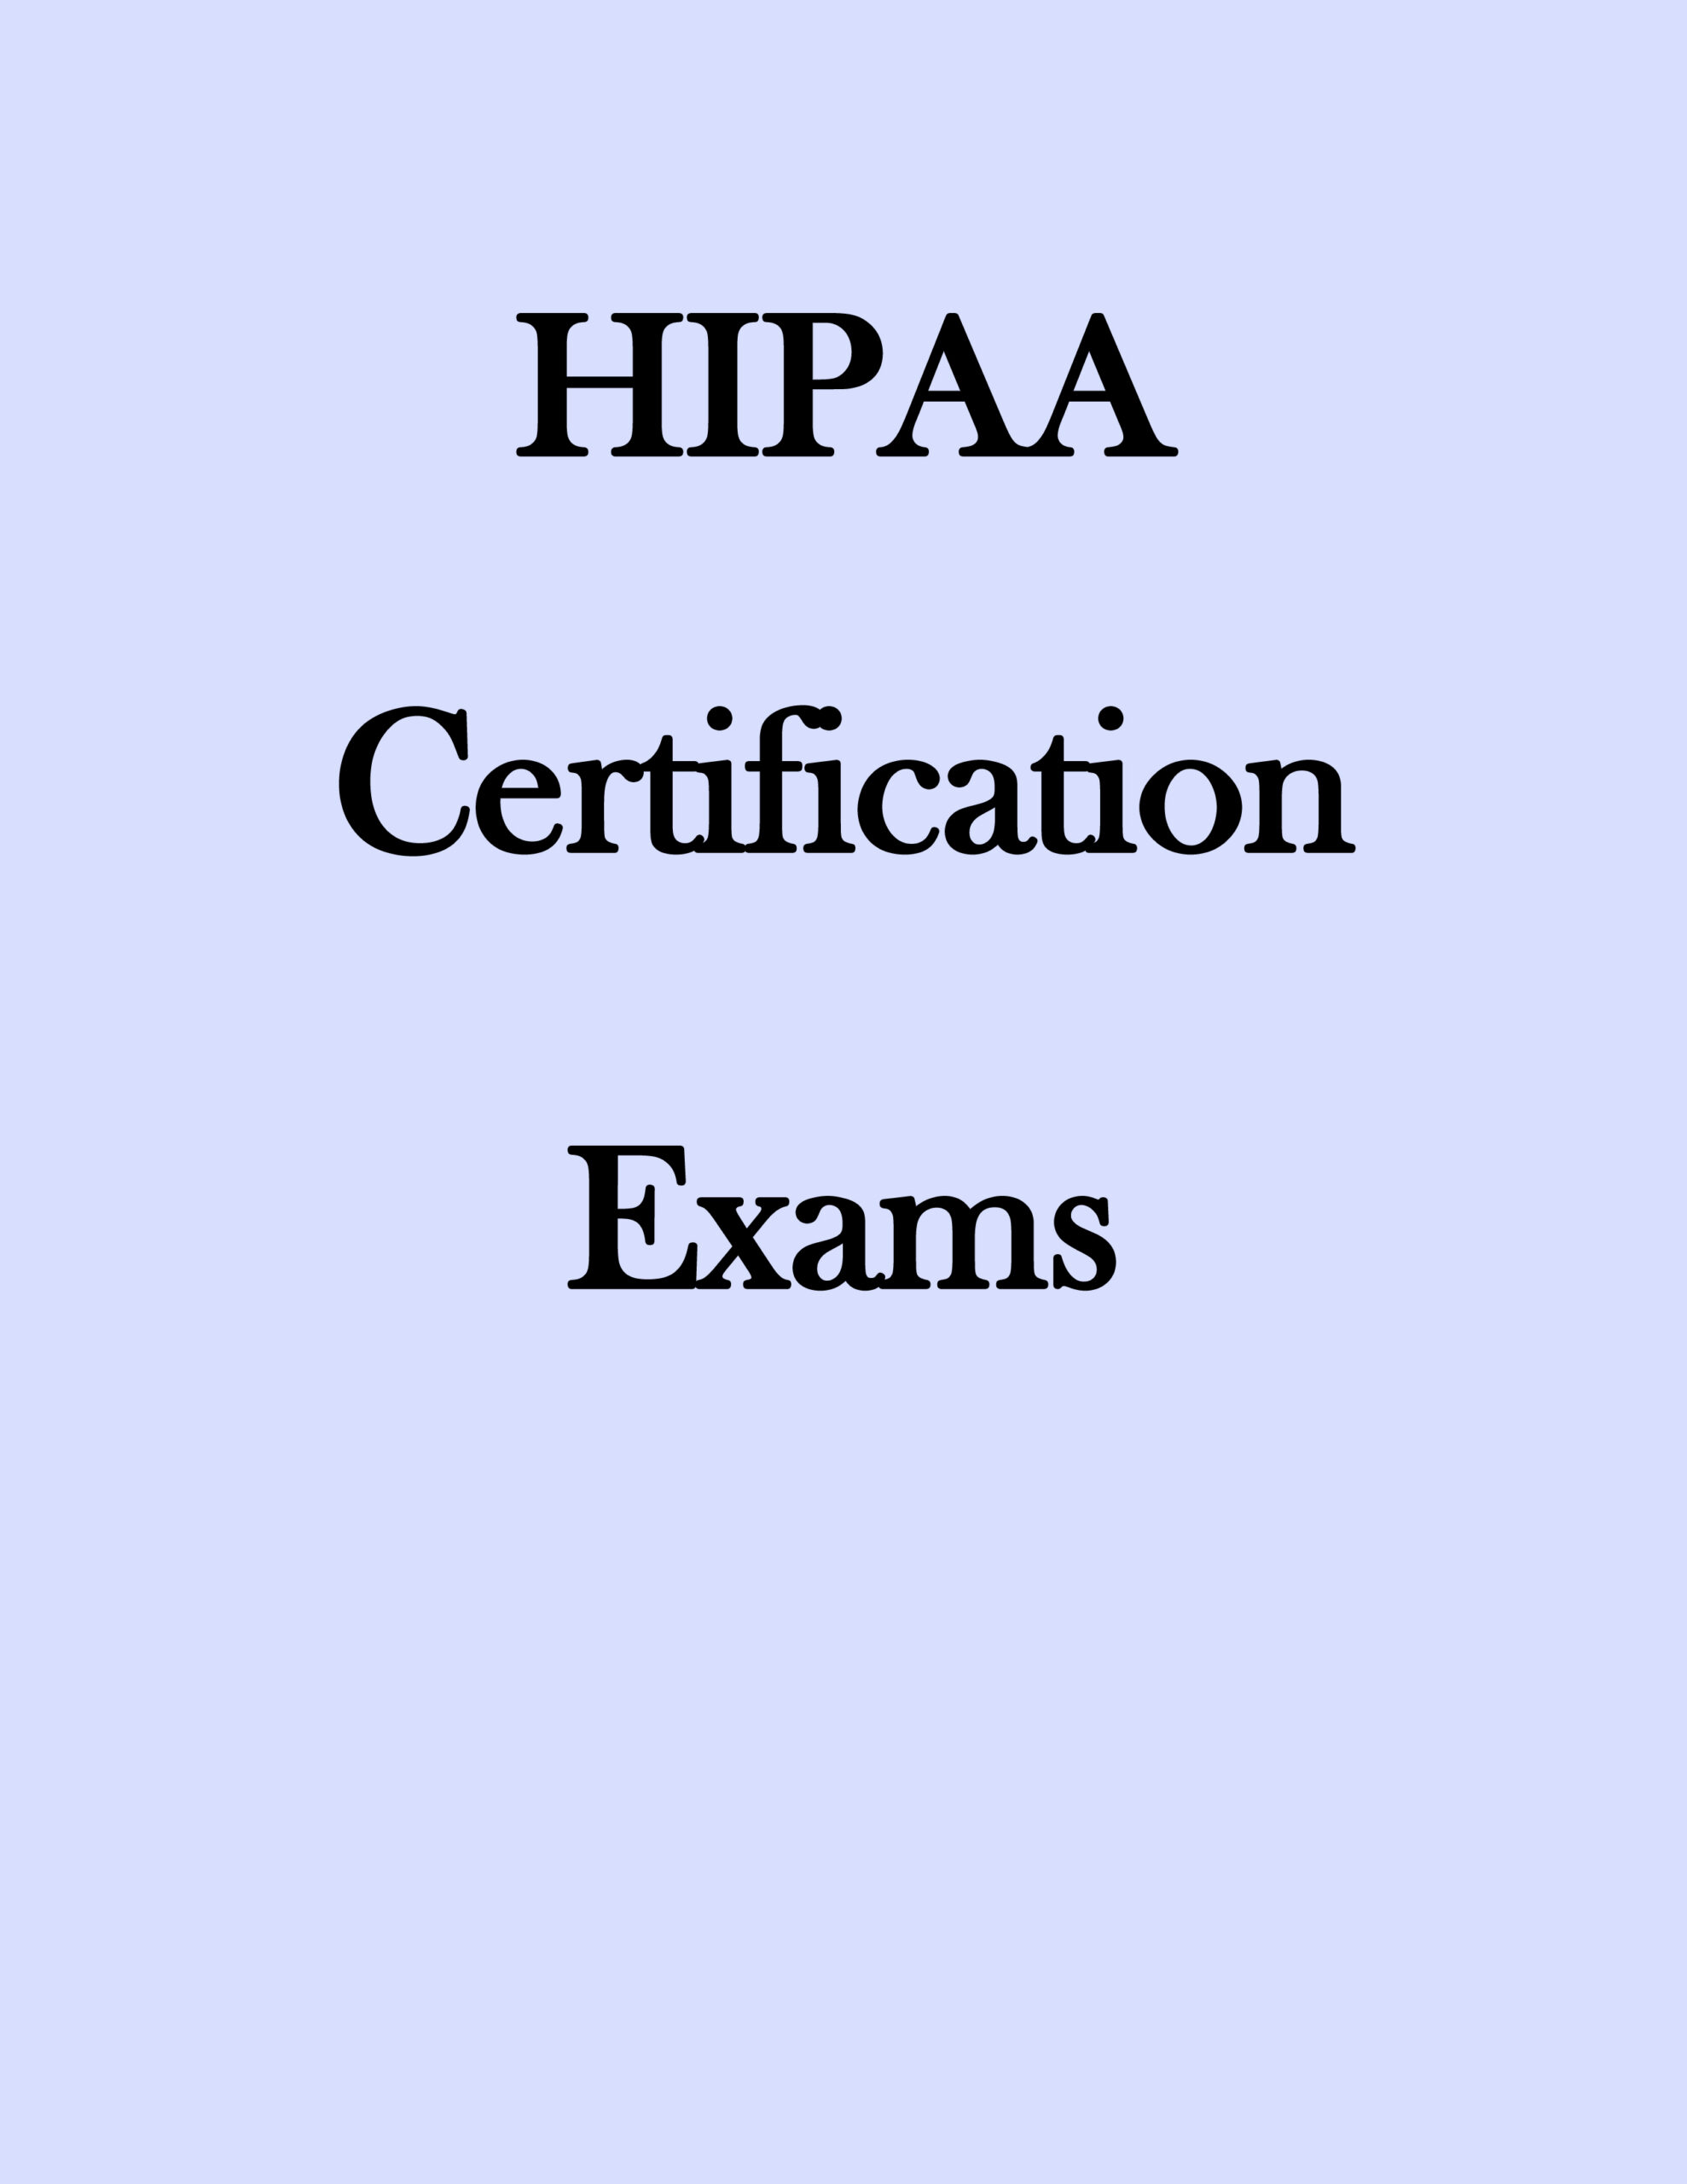 HIPAA Certification Exams